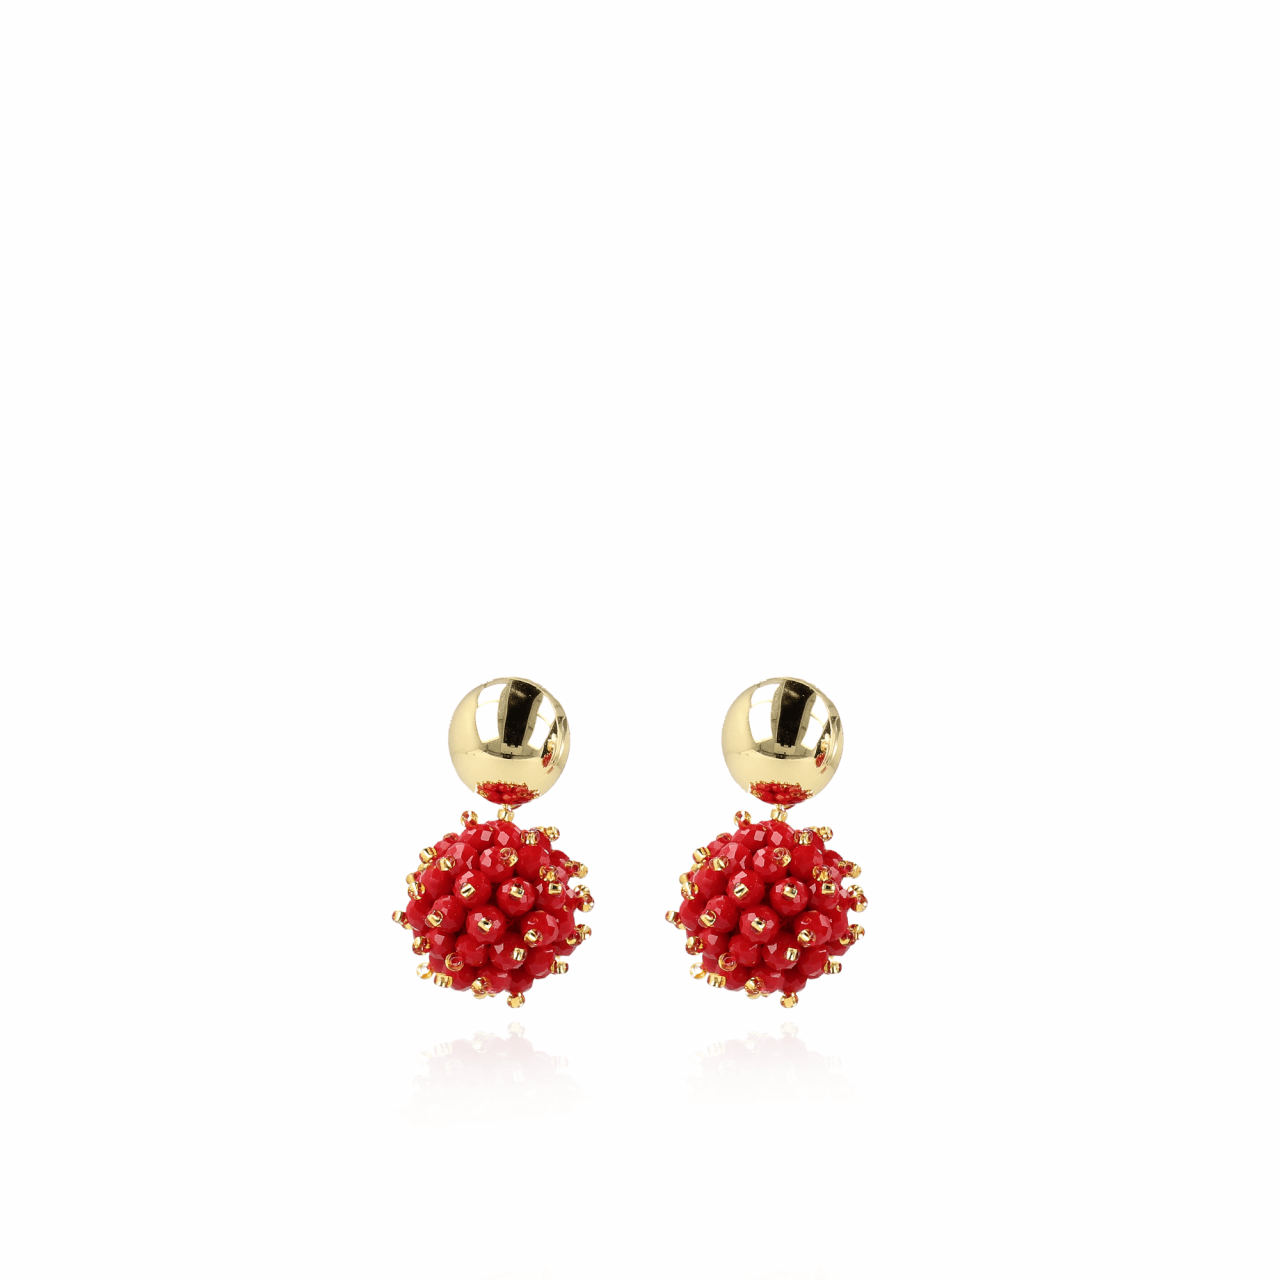 Red earrings jacky glassberry double stones globe s 